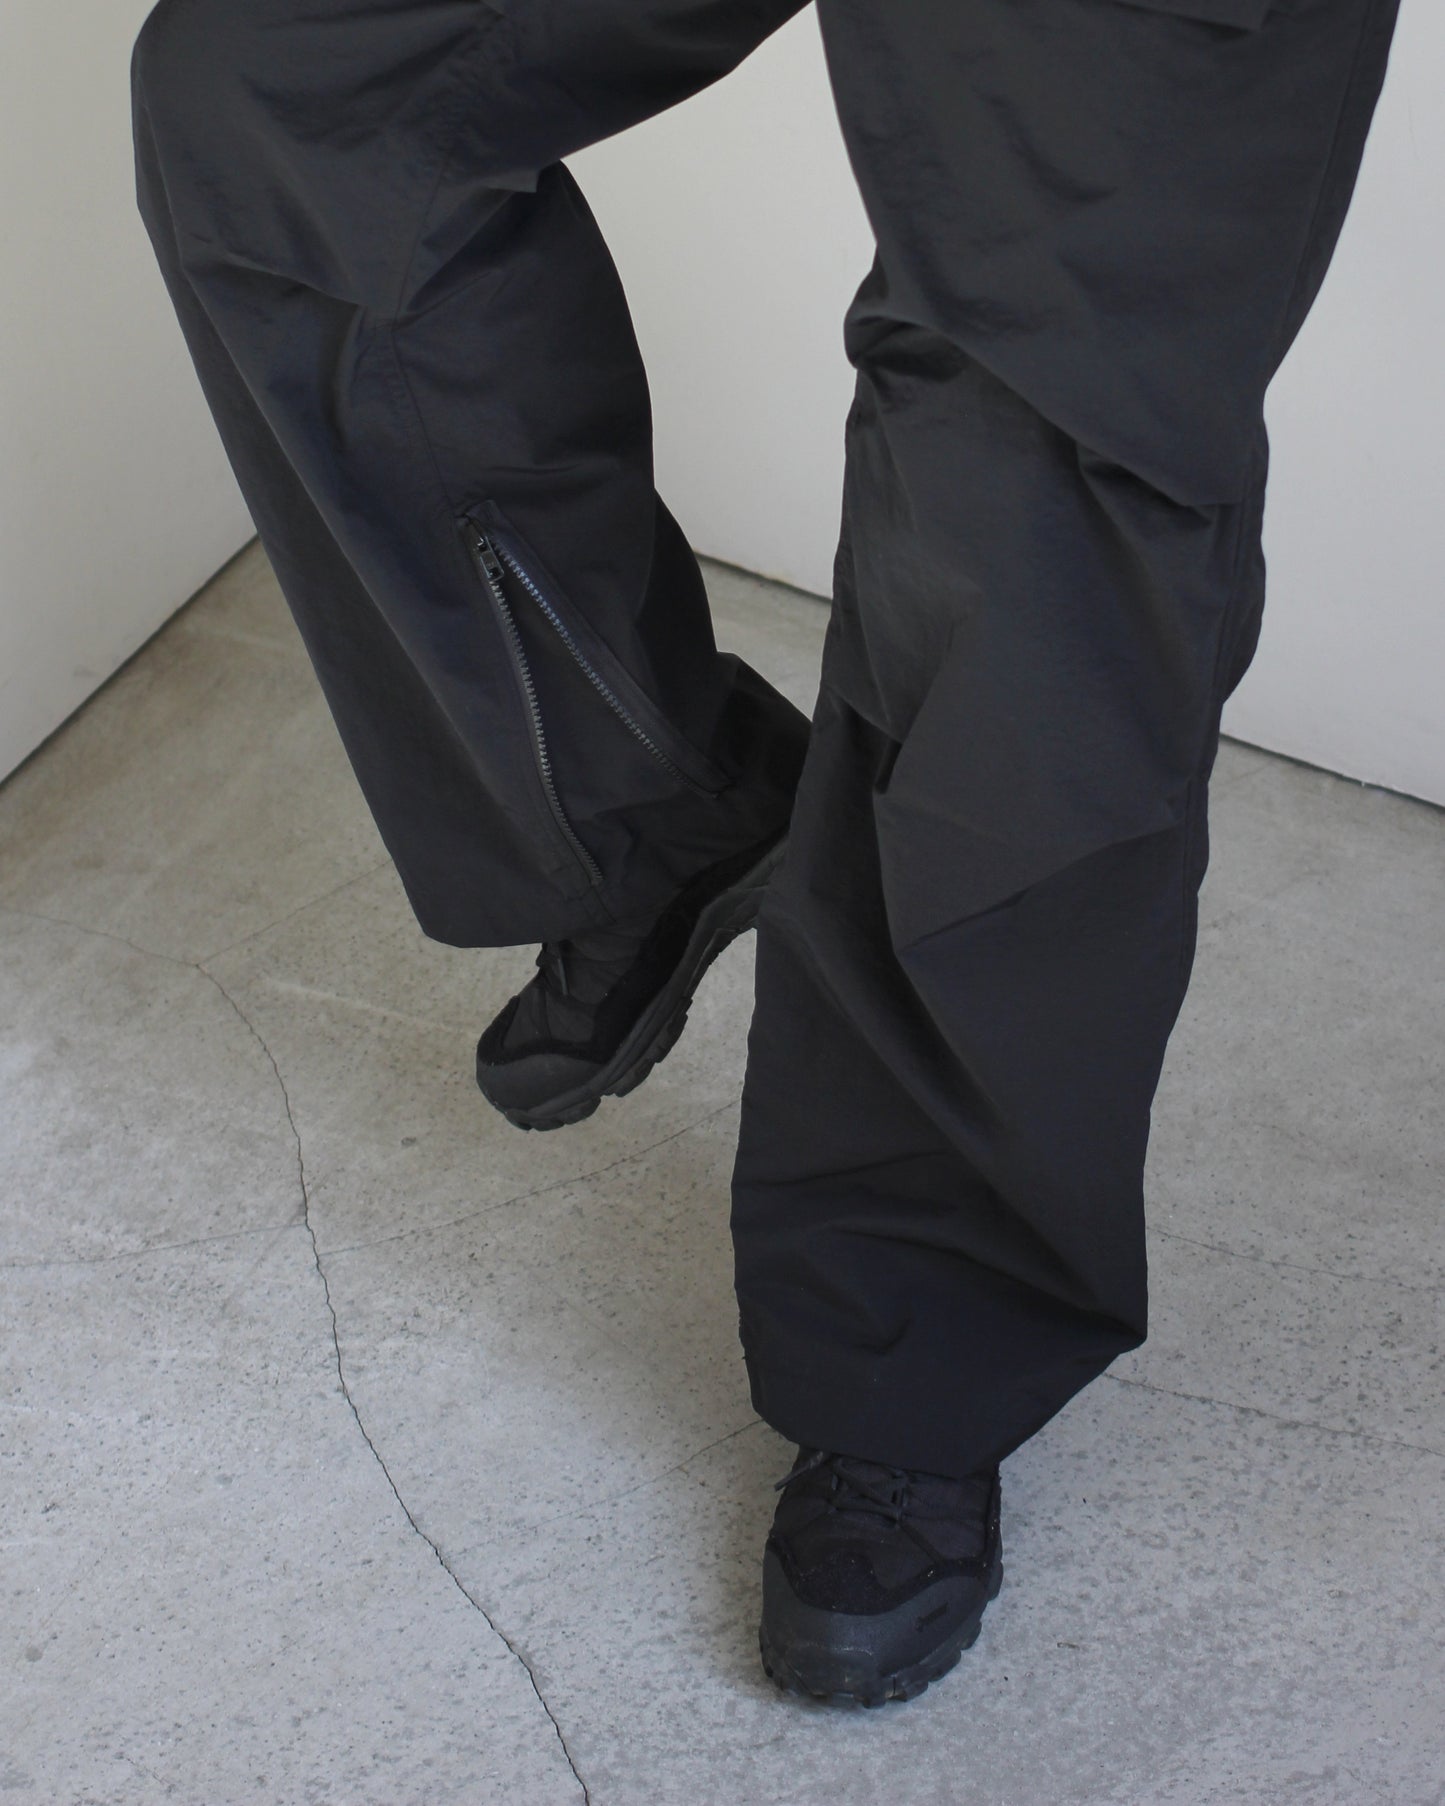 MATSUFUJI / Cargo Pocket Nylon Wide Trousers "BLACK"